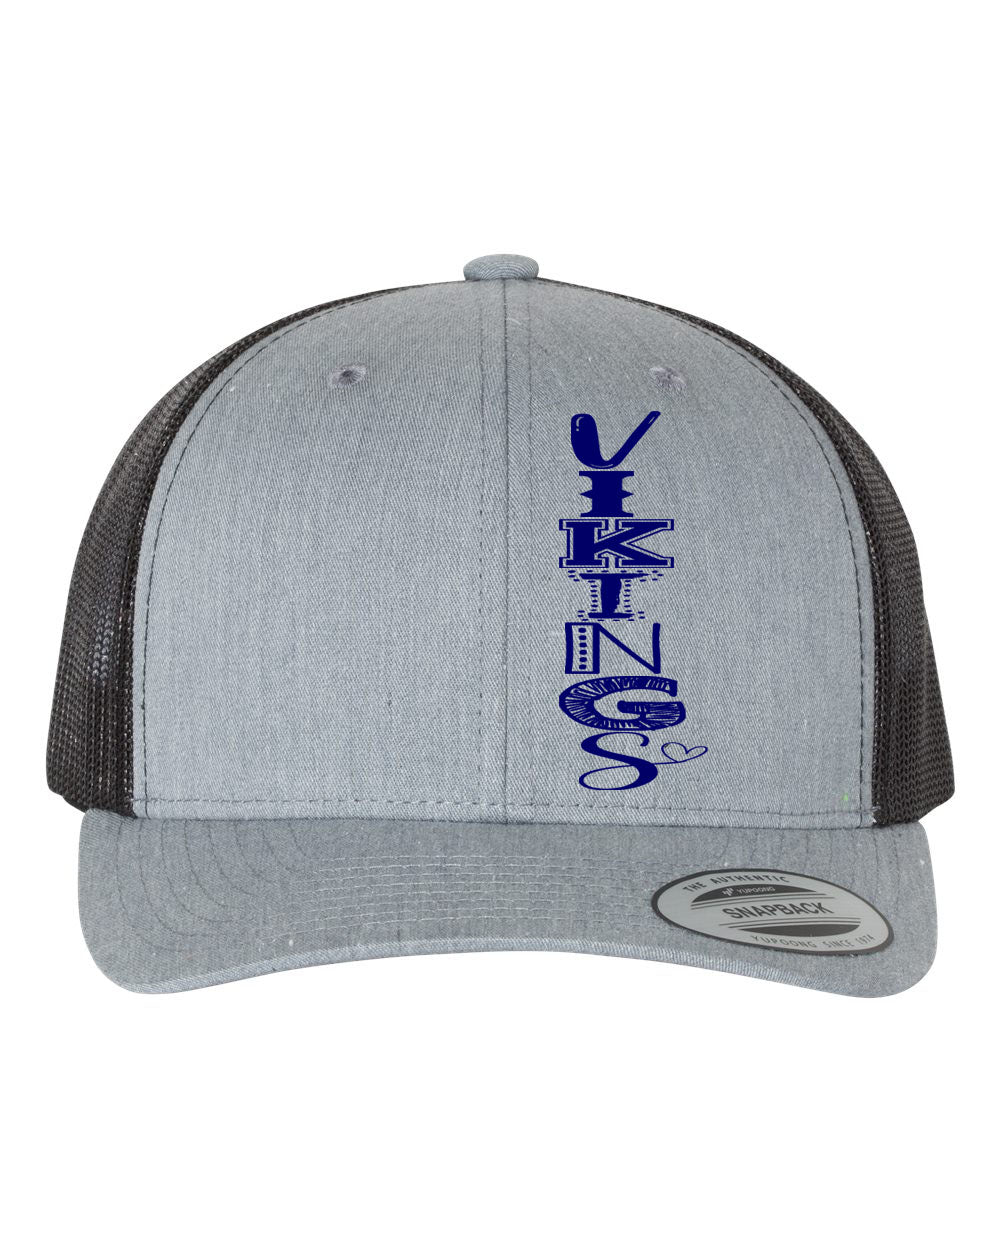 Cedar Mountain Design 3 Trucker Hat